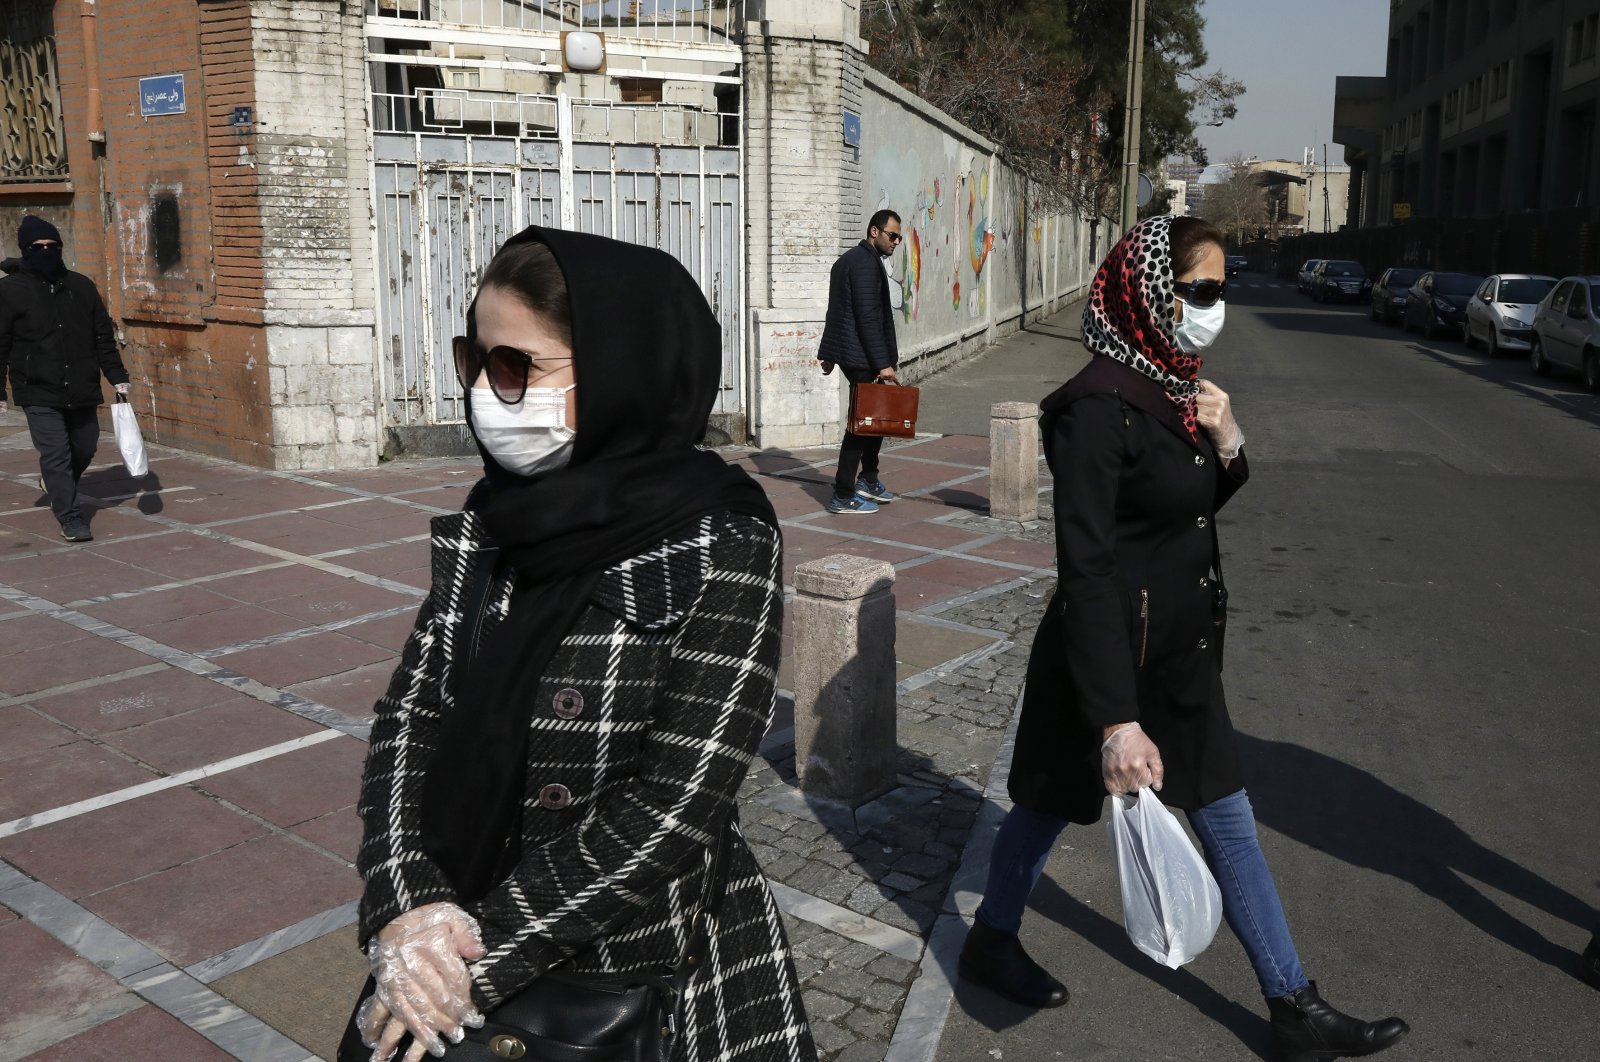 Pedestrians walk as some of them wear masks in downtown Tehran, Iran, Feb. 27, 2020. (AP Photo)